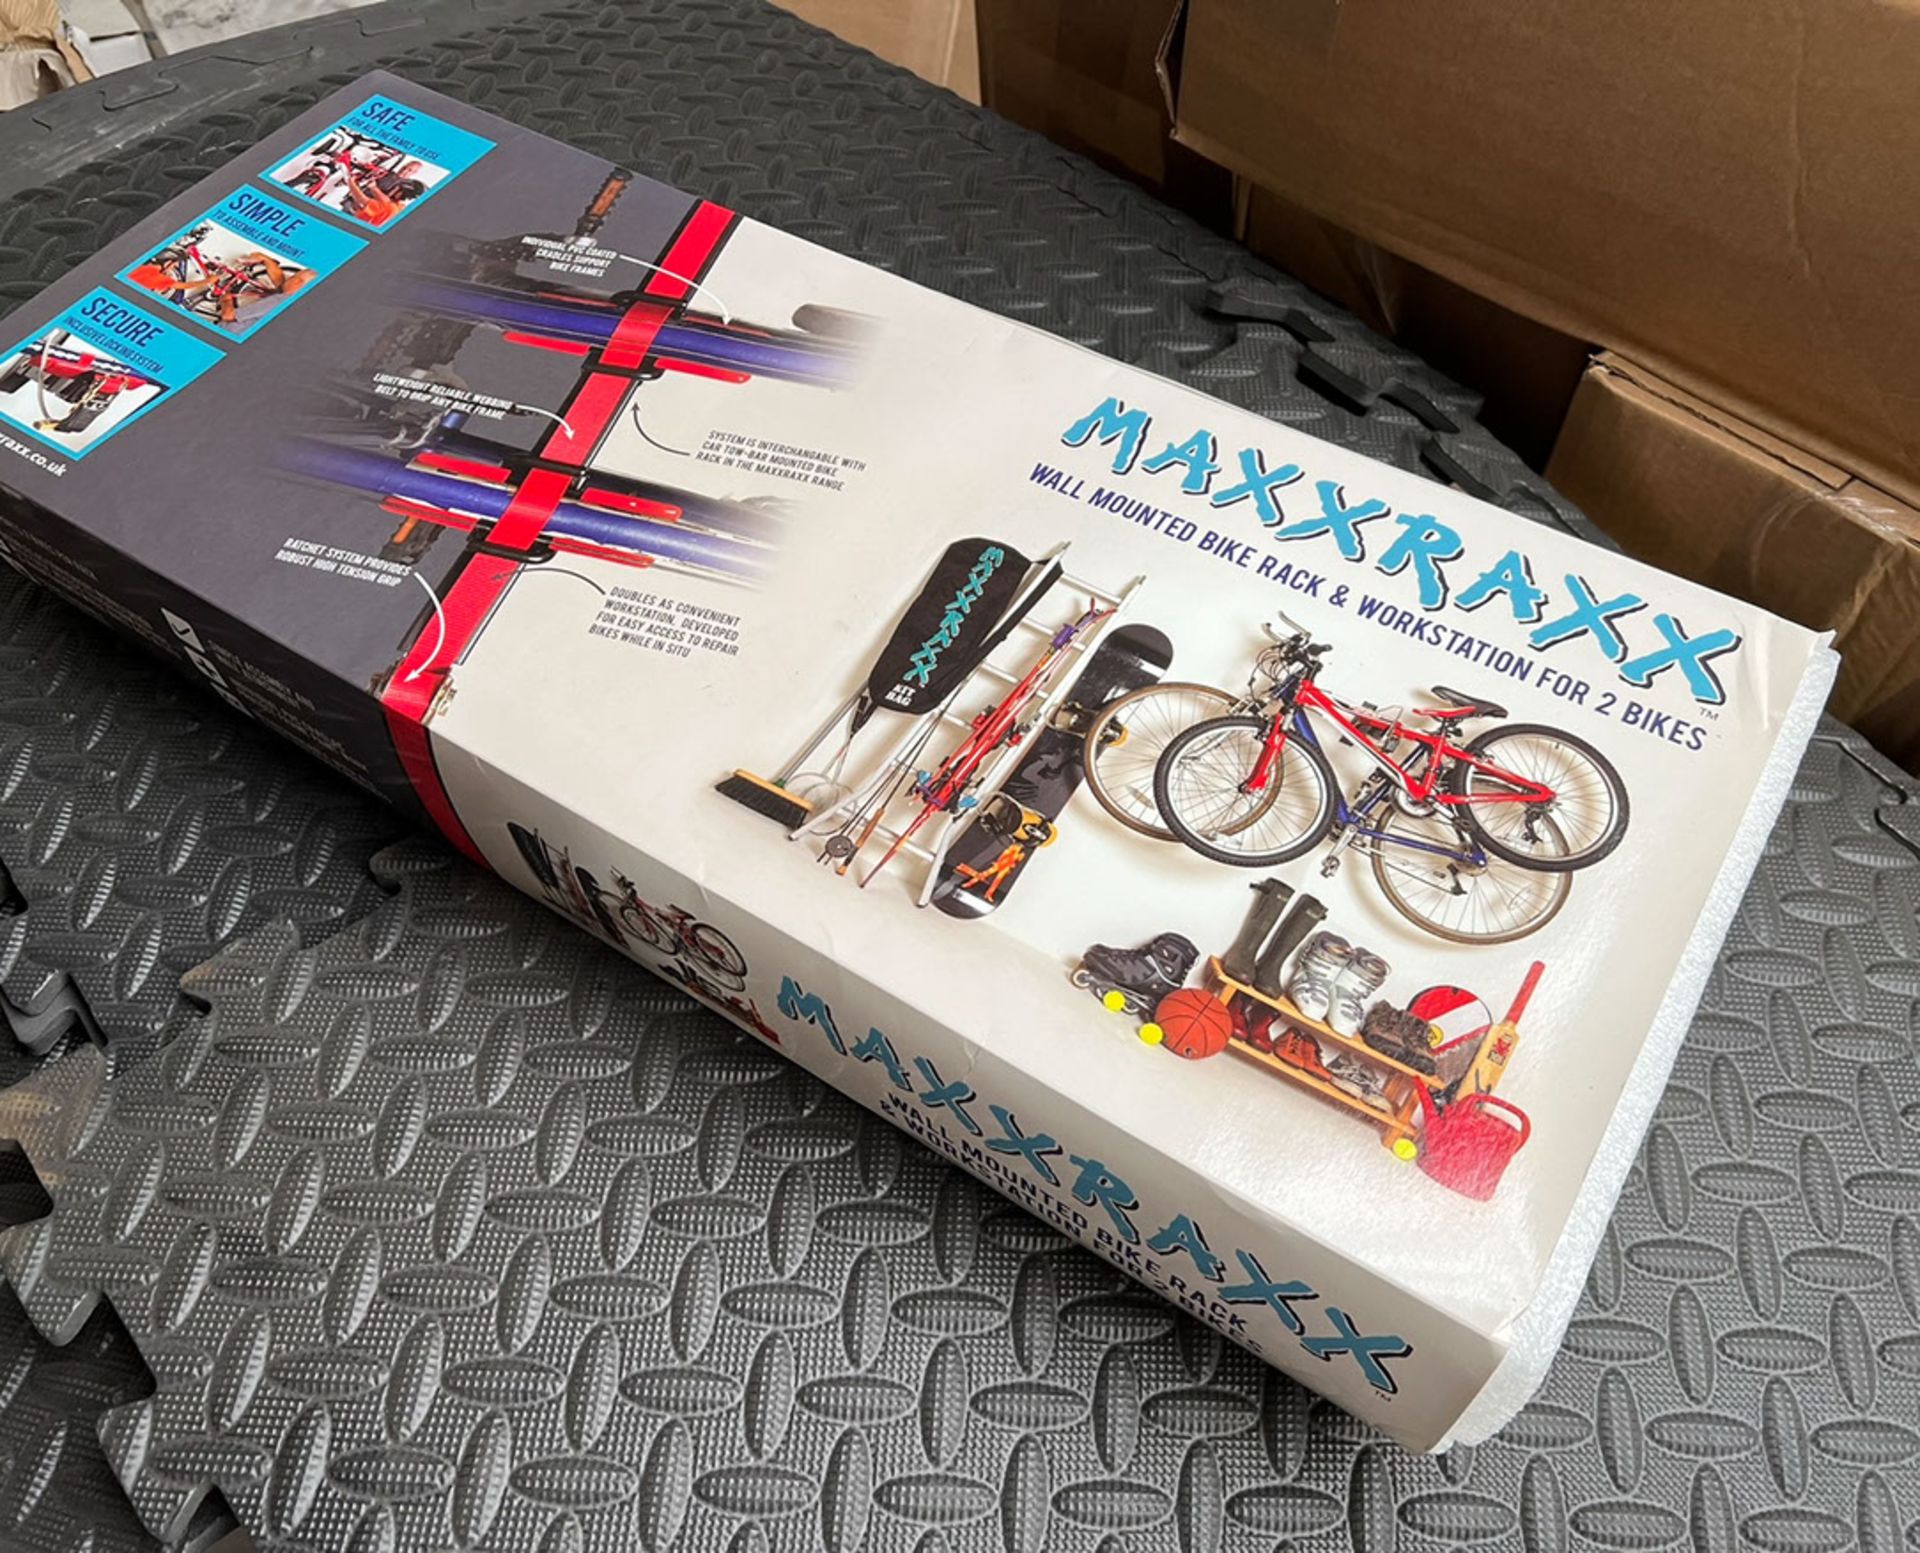 Maxxraxx Wall Mounted Bike Rack and Workstation for 2 Bikes